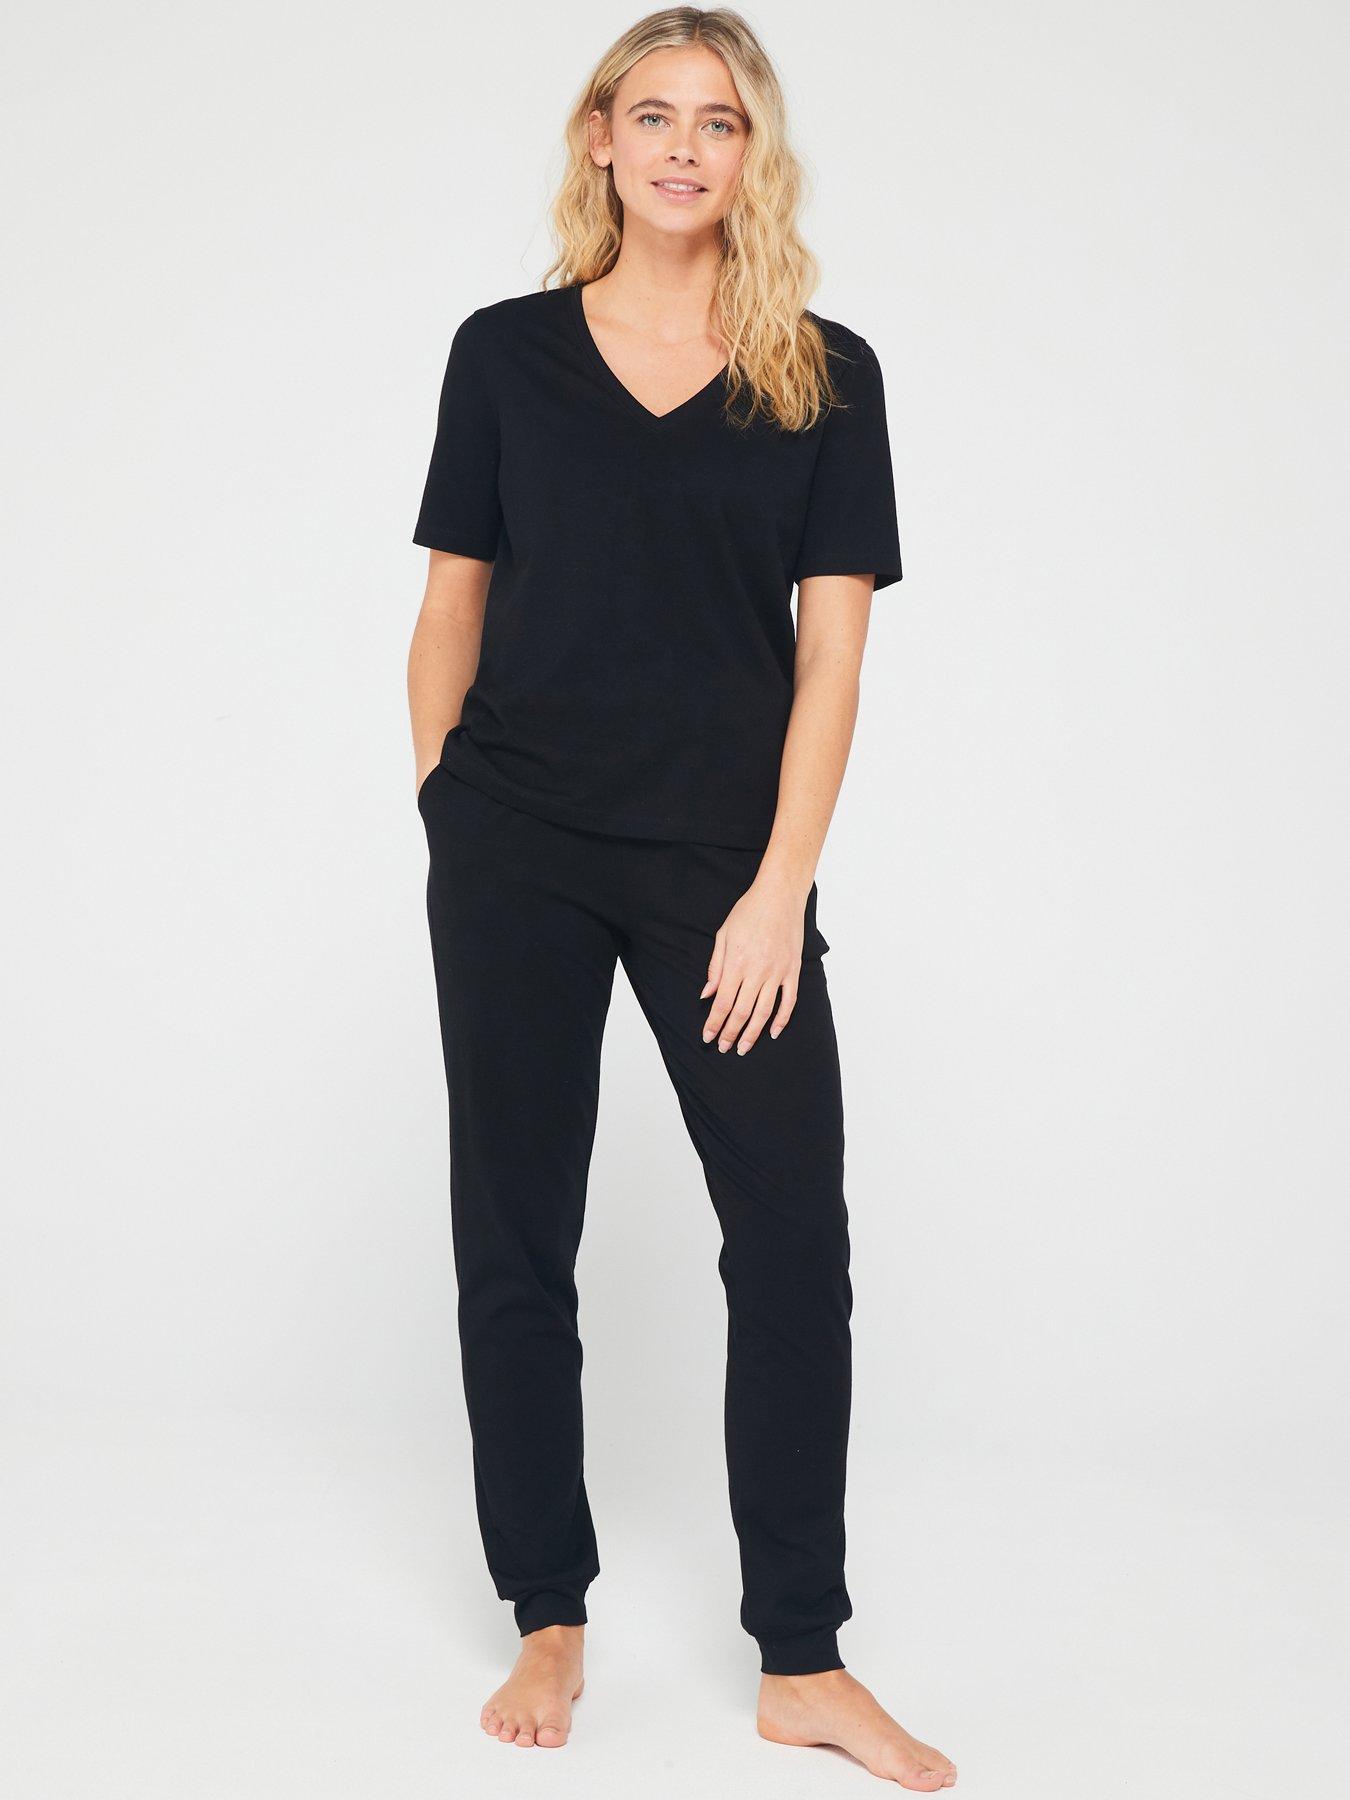 Calvin Klein, Pajamas, Calvin Klein Kids Twopiece Set Long Sleeve Top W  Cozy Pants Size Xs 56